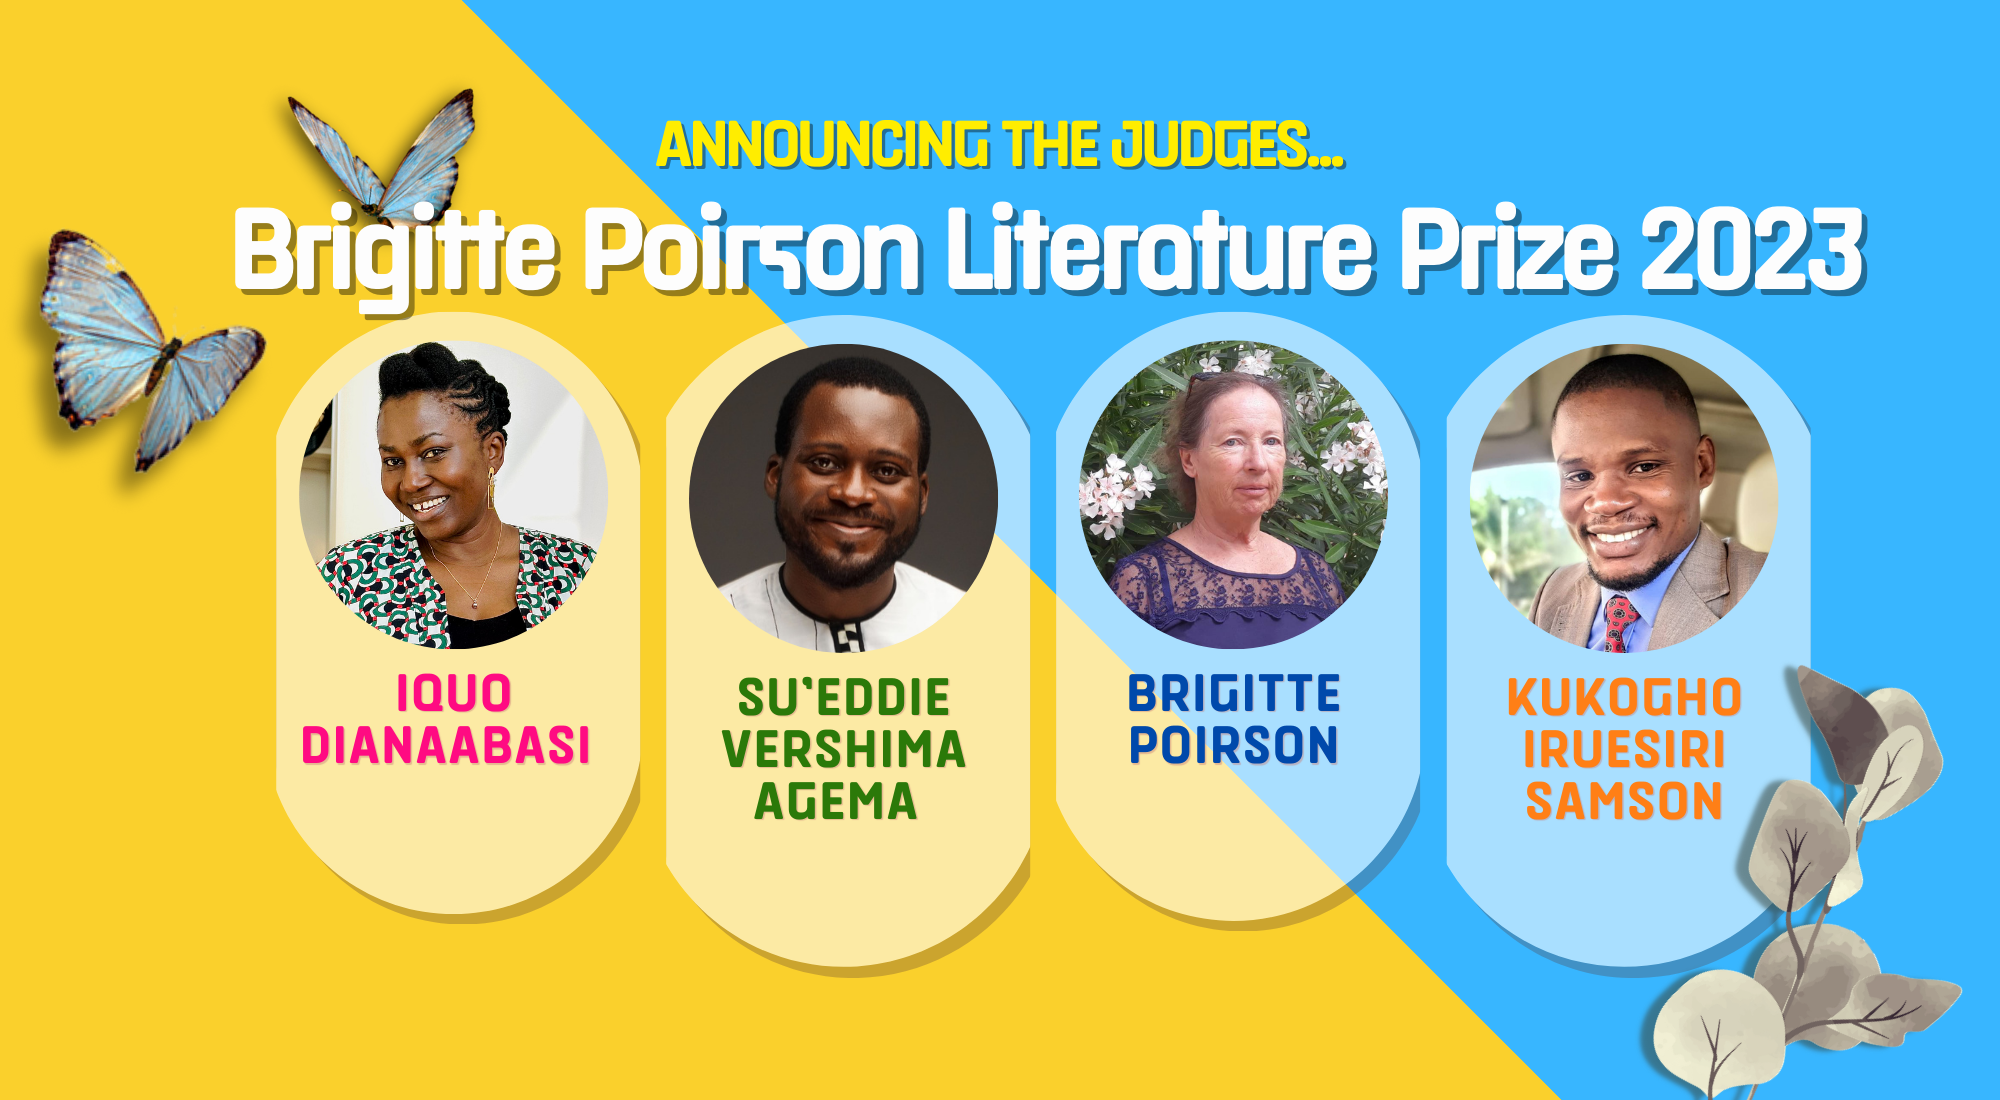 Announcing the Esteemed Panel of Judges for the Brigitte Poirson Literature Prize 2023